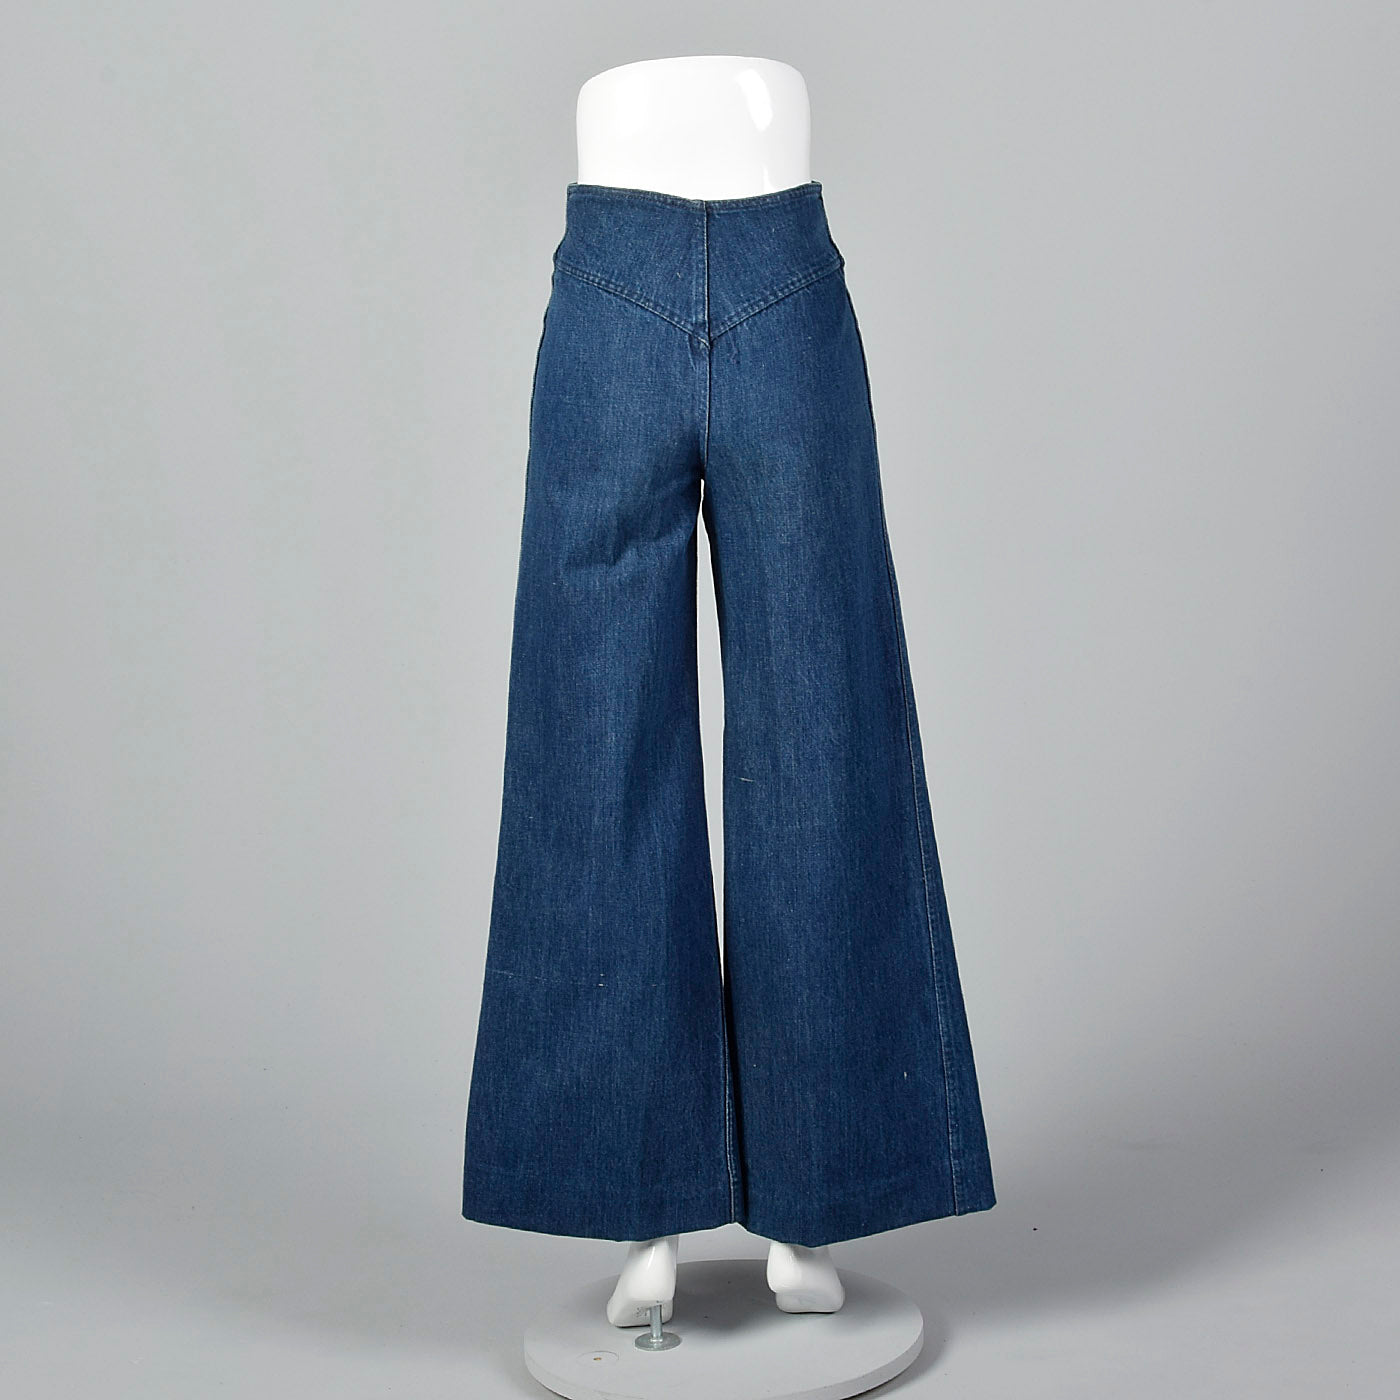 1970s Cotton Denim Zip Front Bell Bottom Jeans